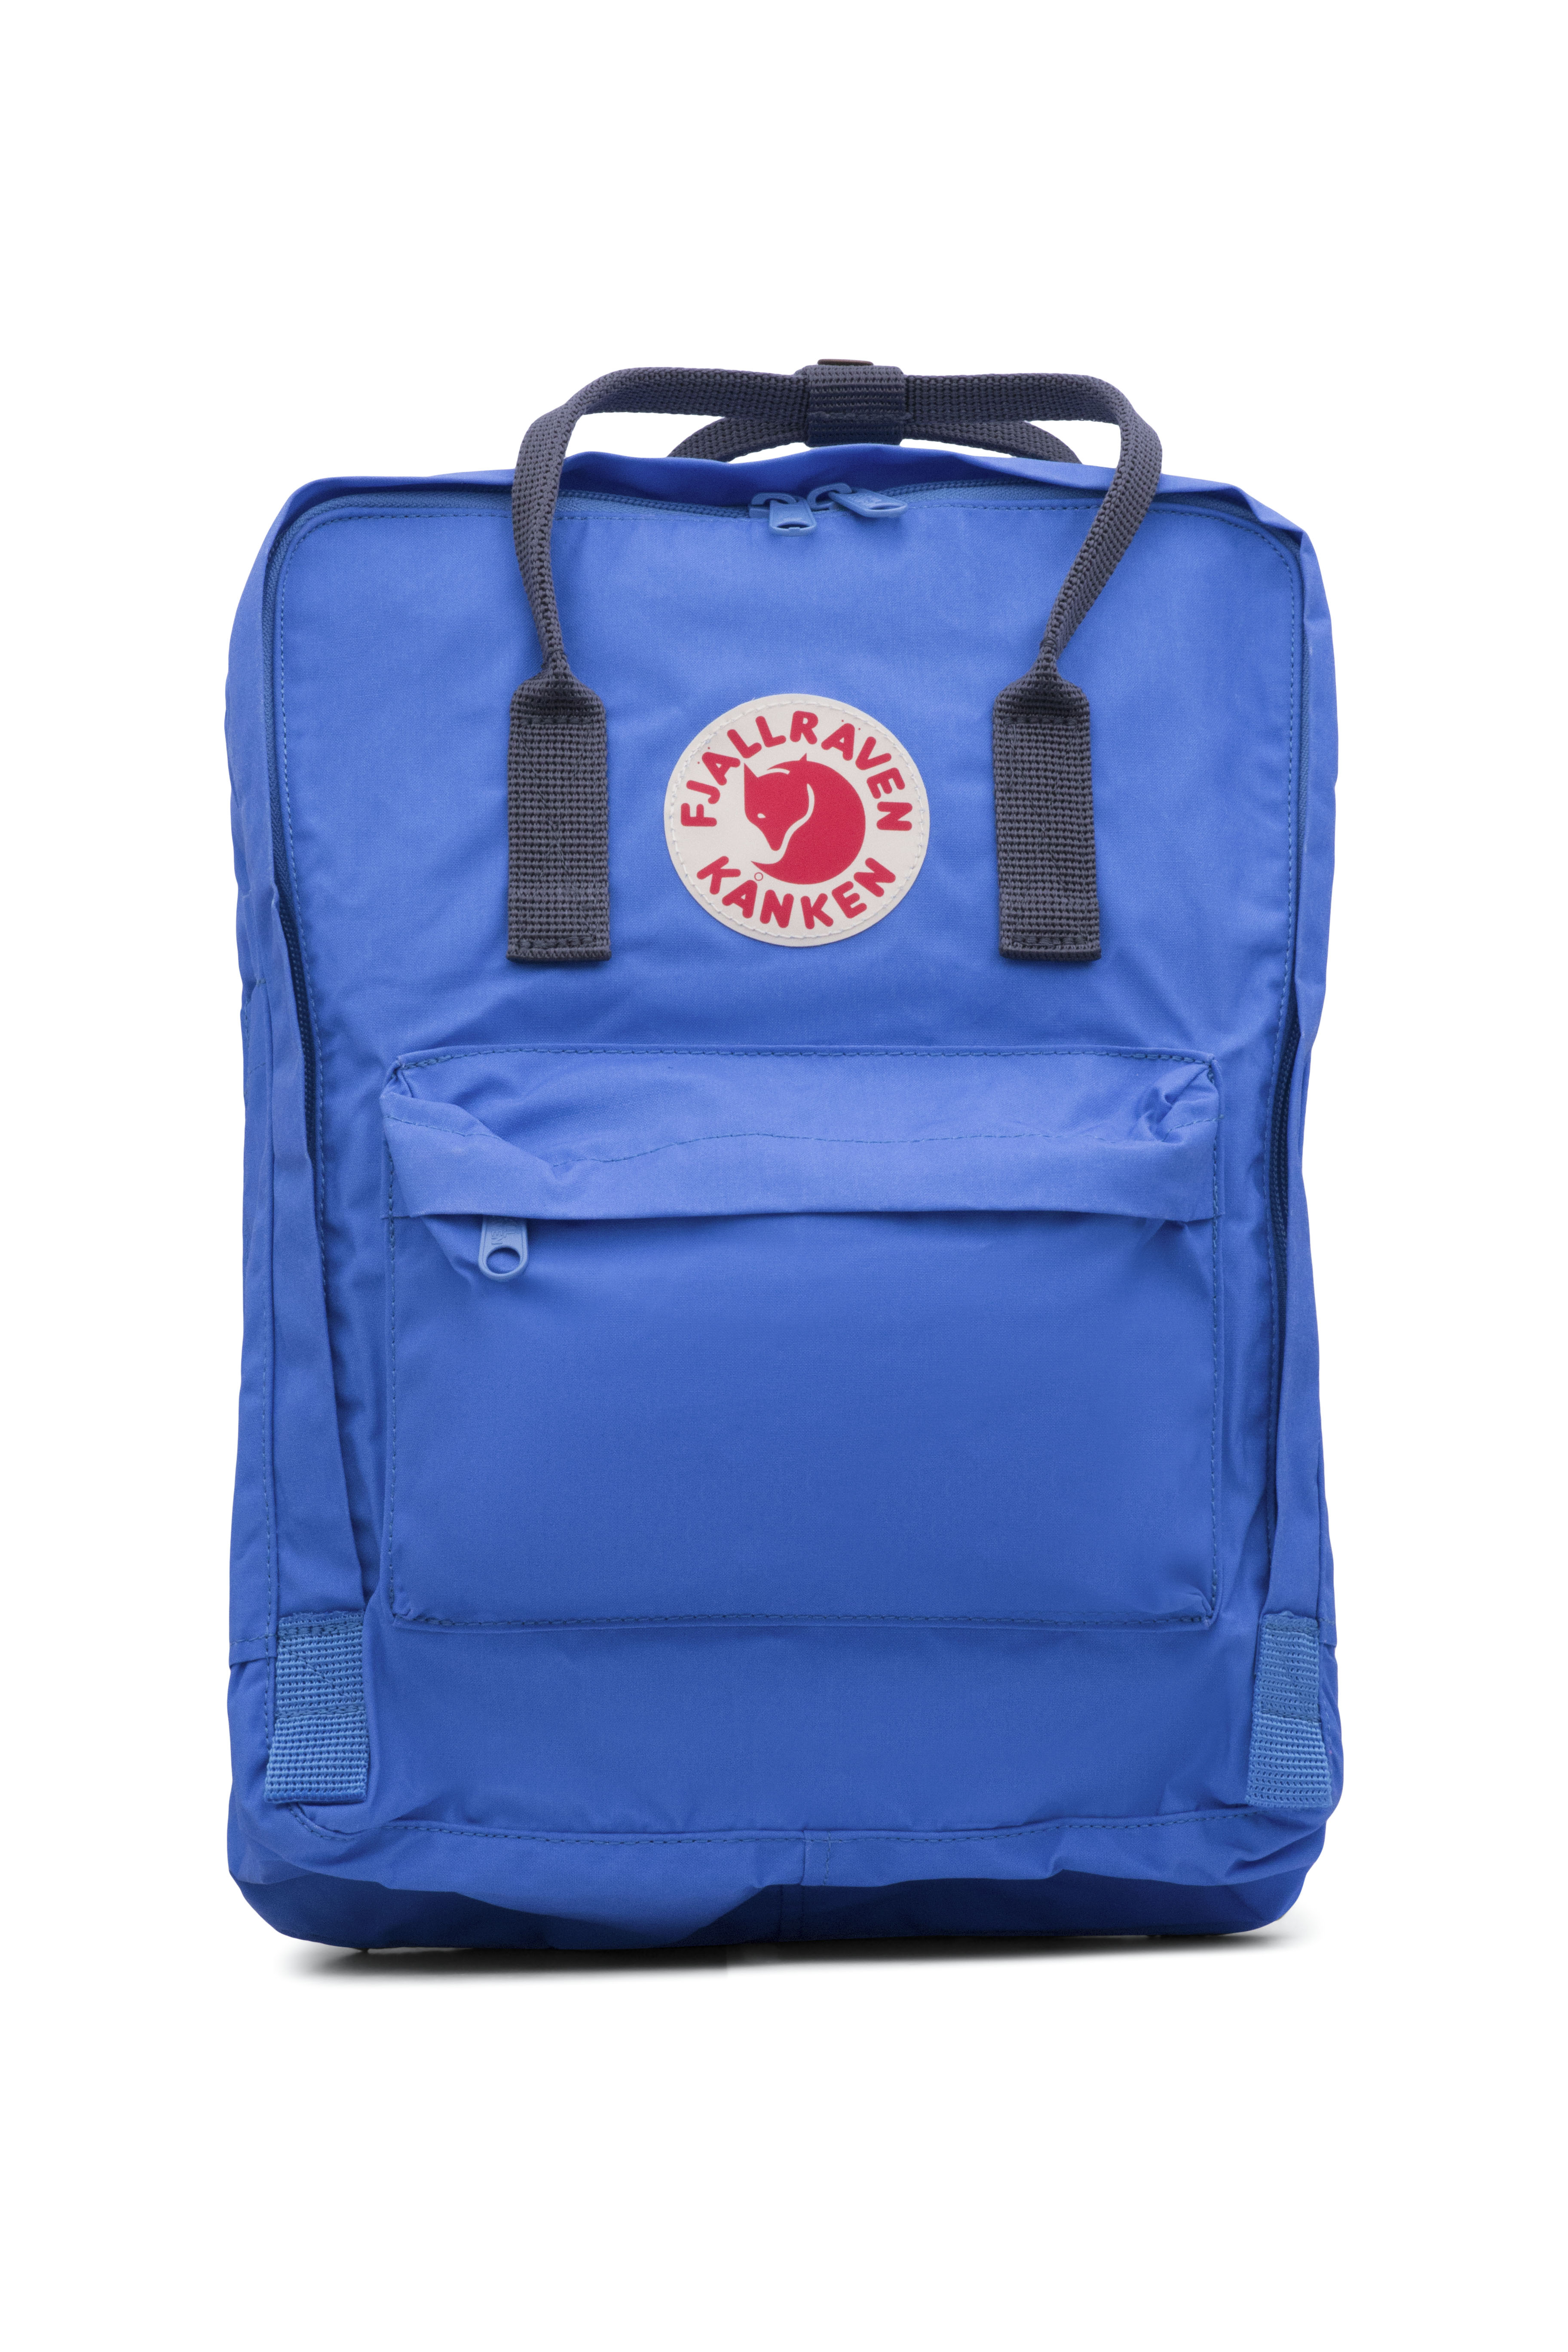 Fjallraven - Kanken Classic Backpack for Everyday - UN Blue/Navy